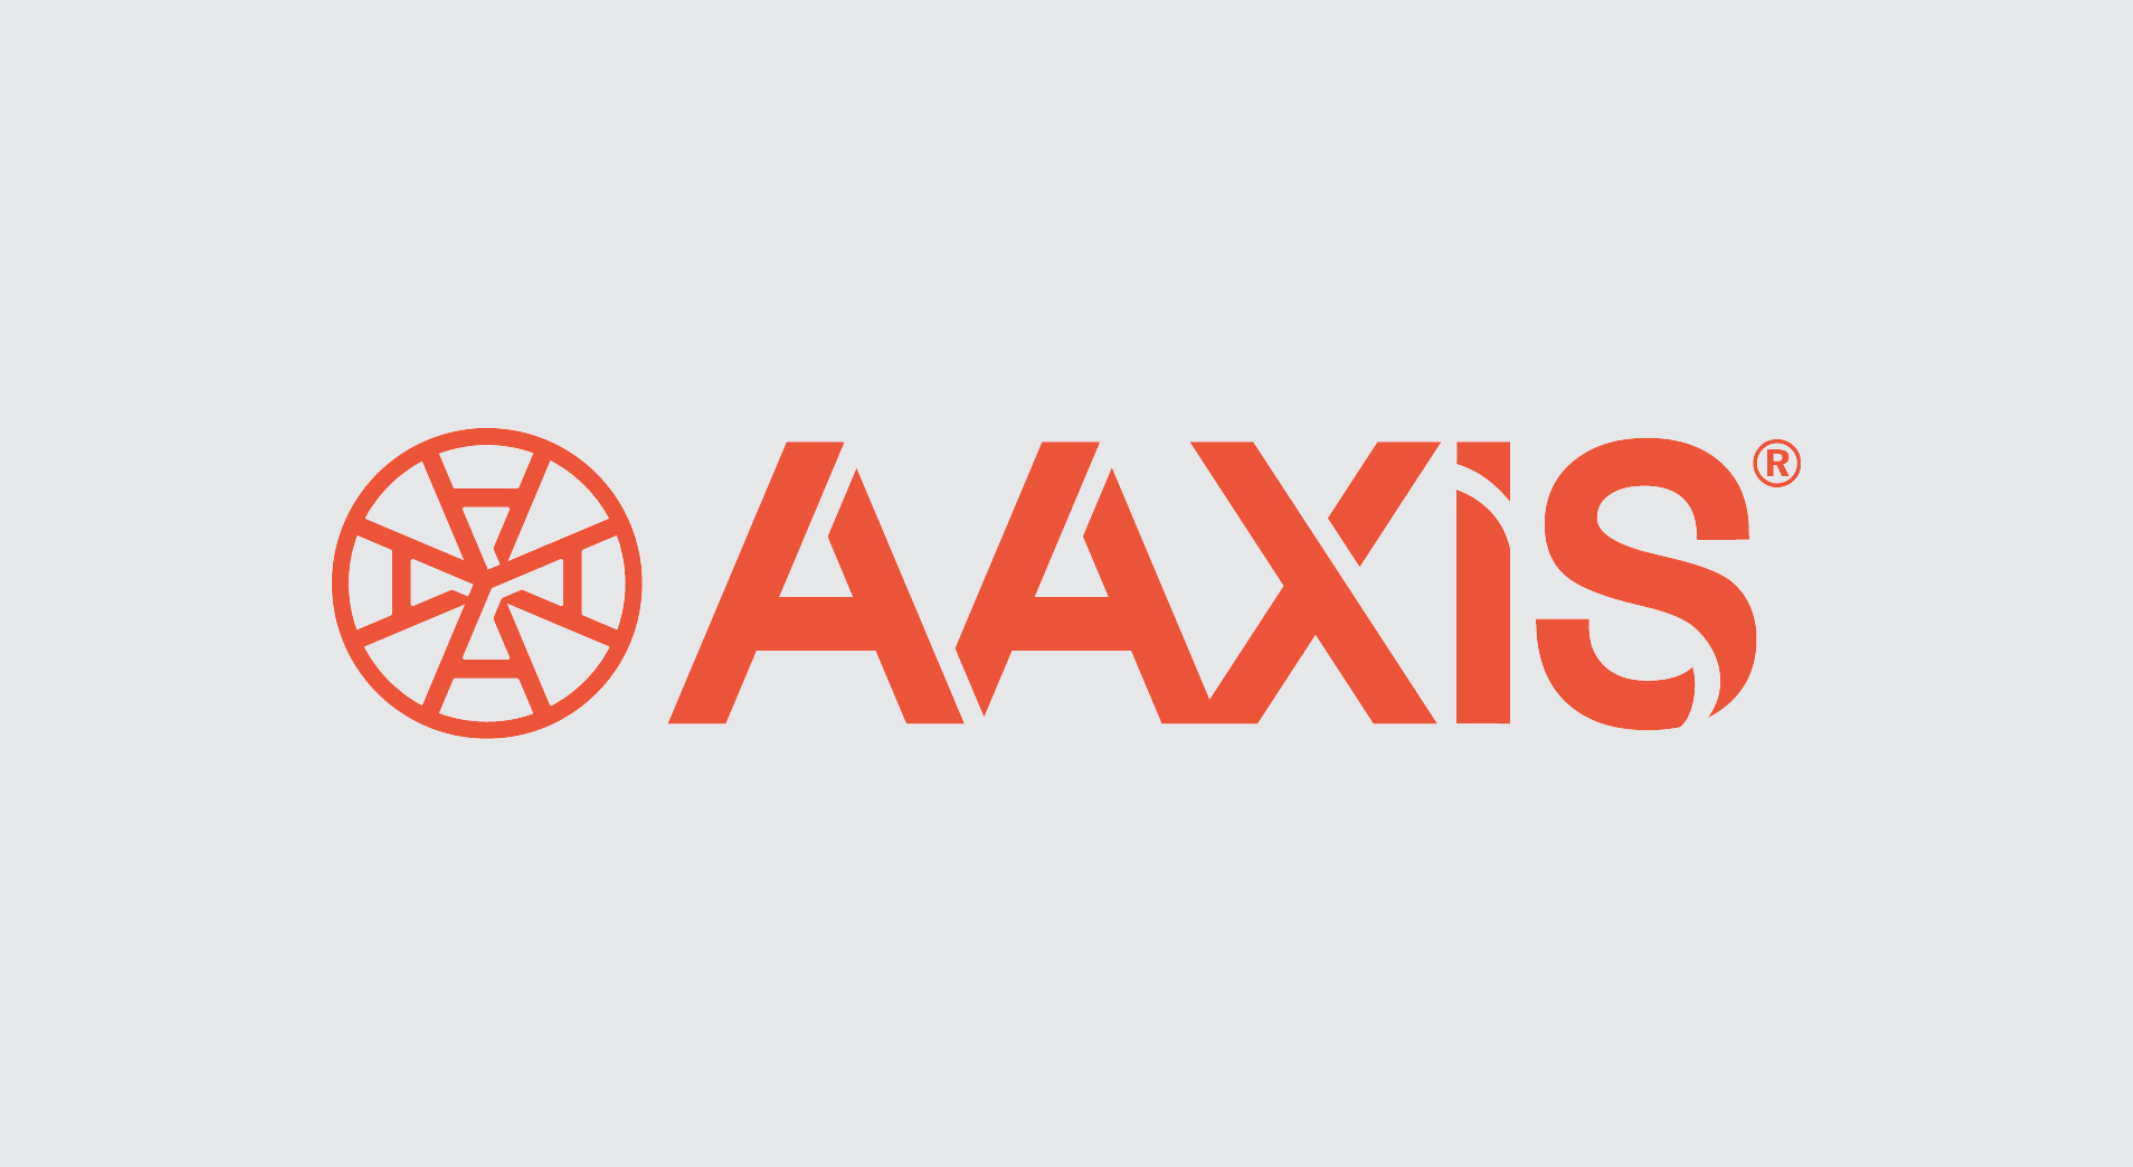 Aaxis logo website format